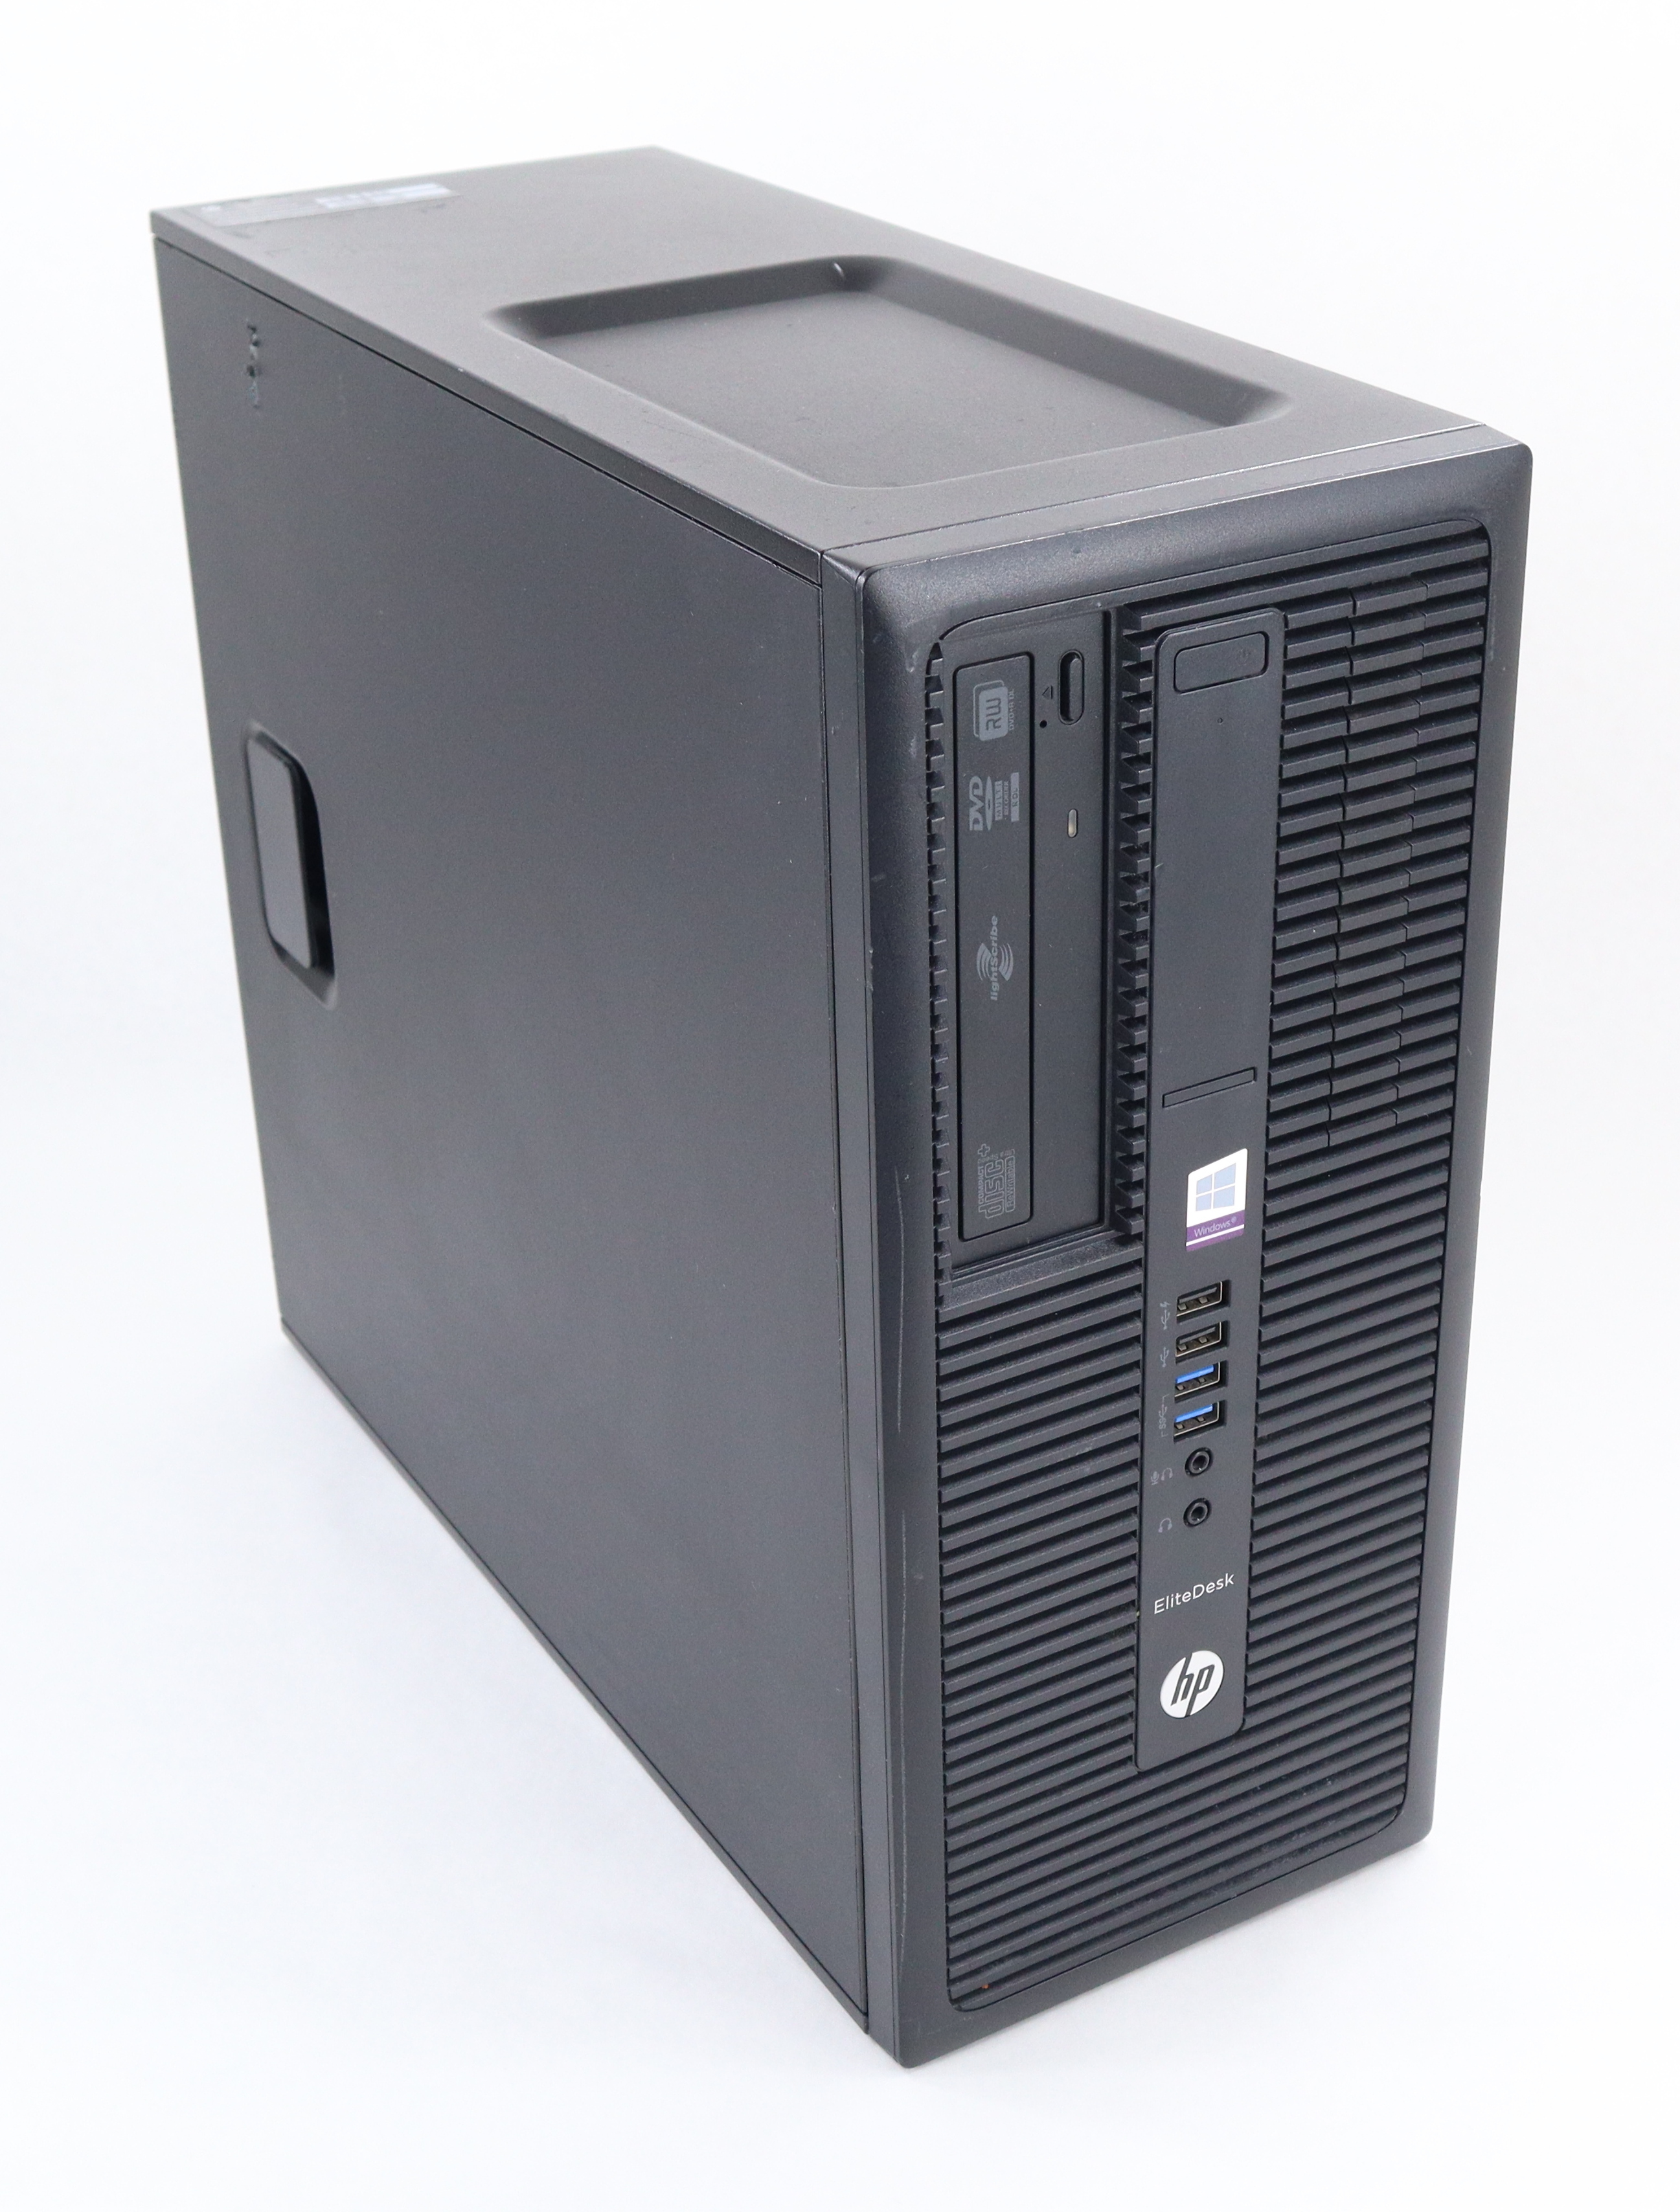 HP EliteDesk 800 Gen2 Tower PC i5-6500 3.2GHz RAM 16GB HDD 1TB Win10 V8W56UP#ABA